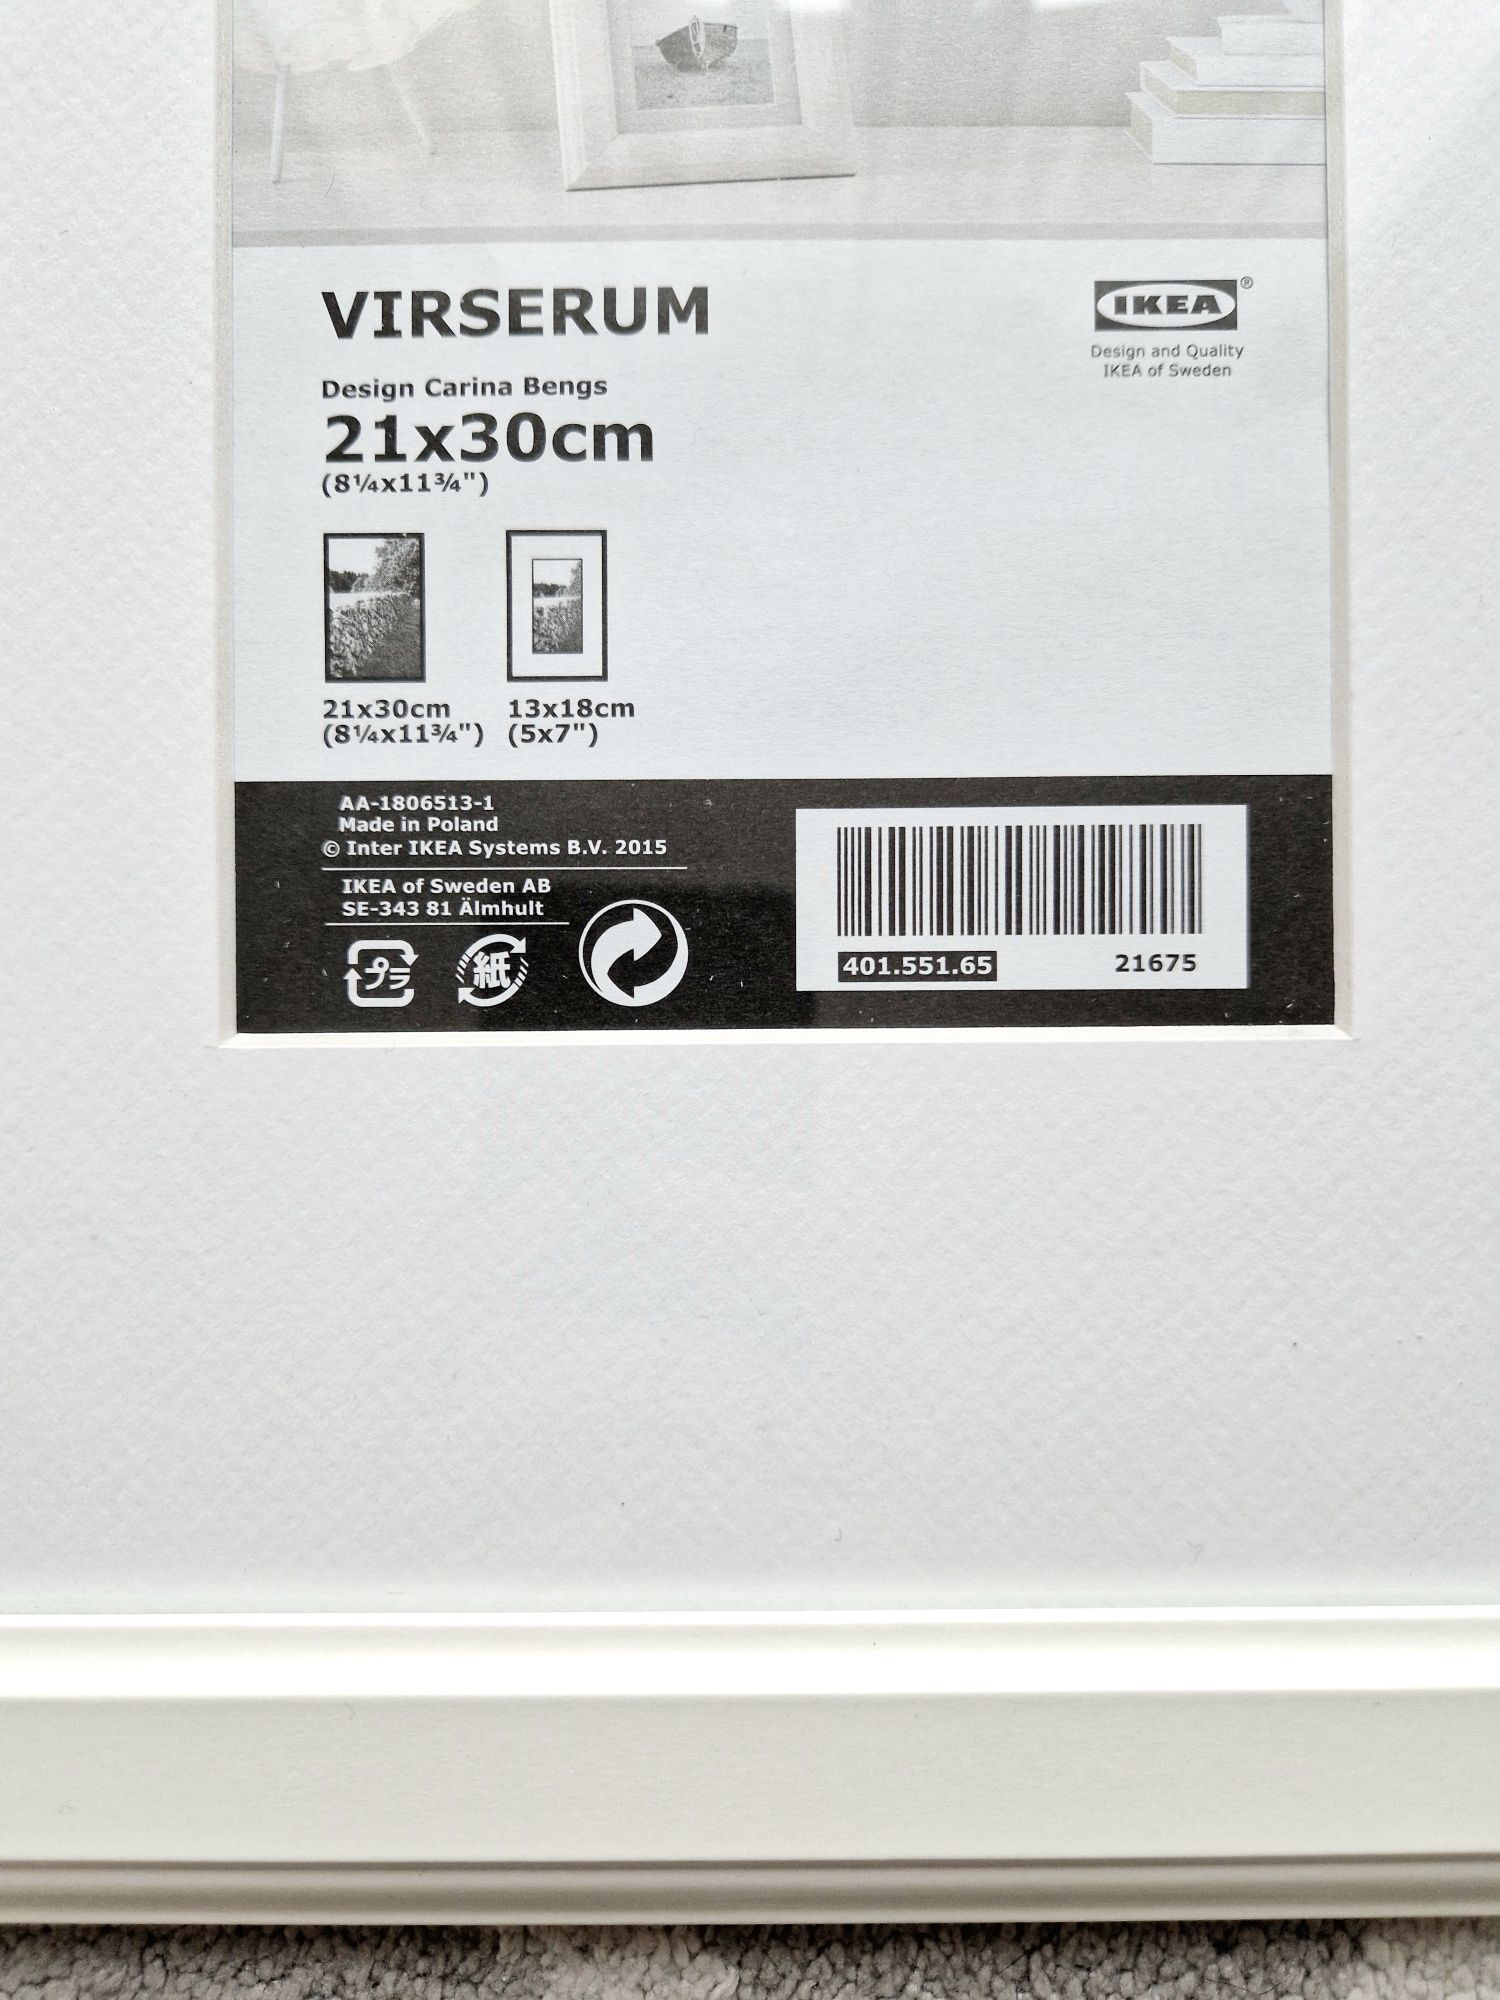 IKEA biała ramka Virserum 21x30 z passepartout stan bdb